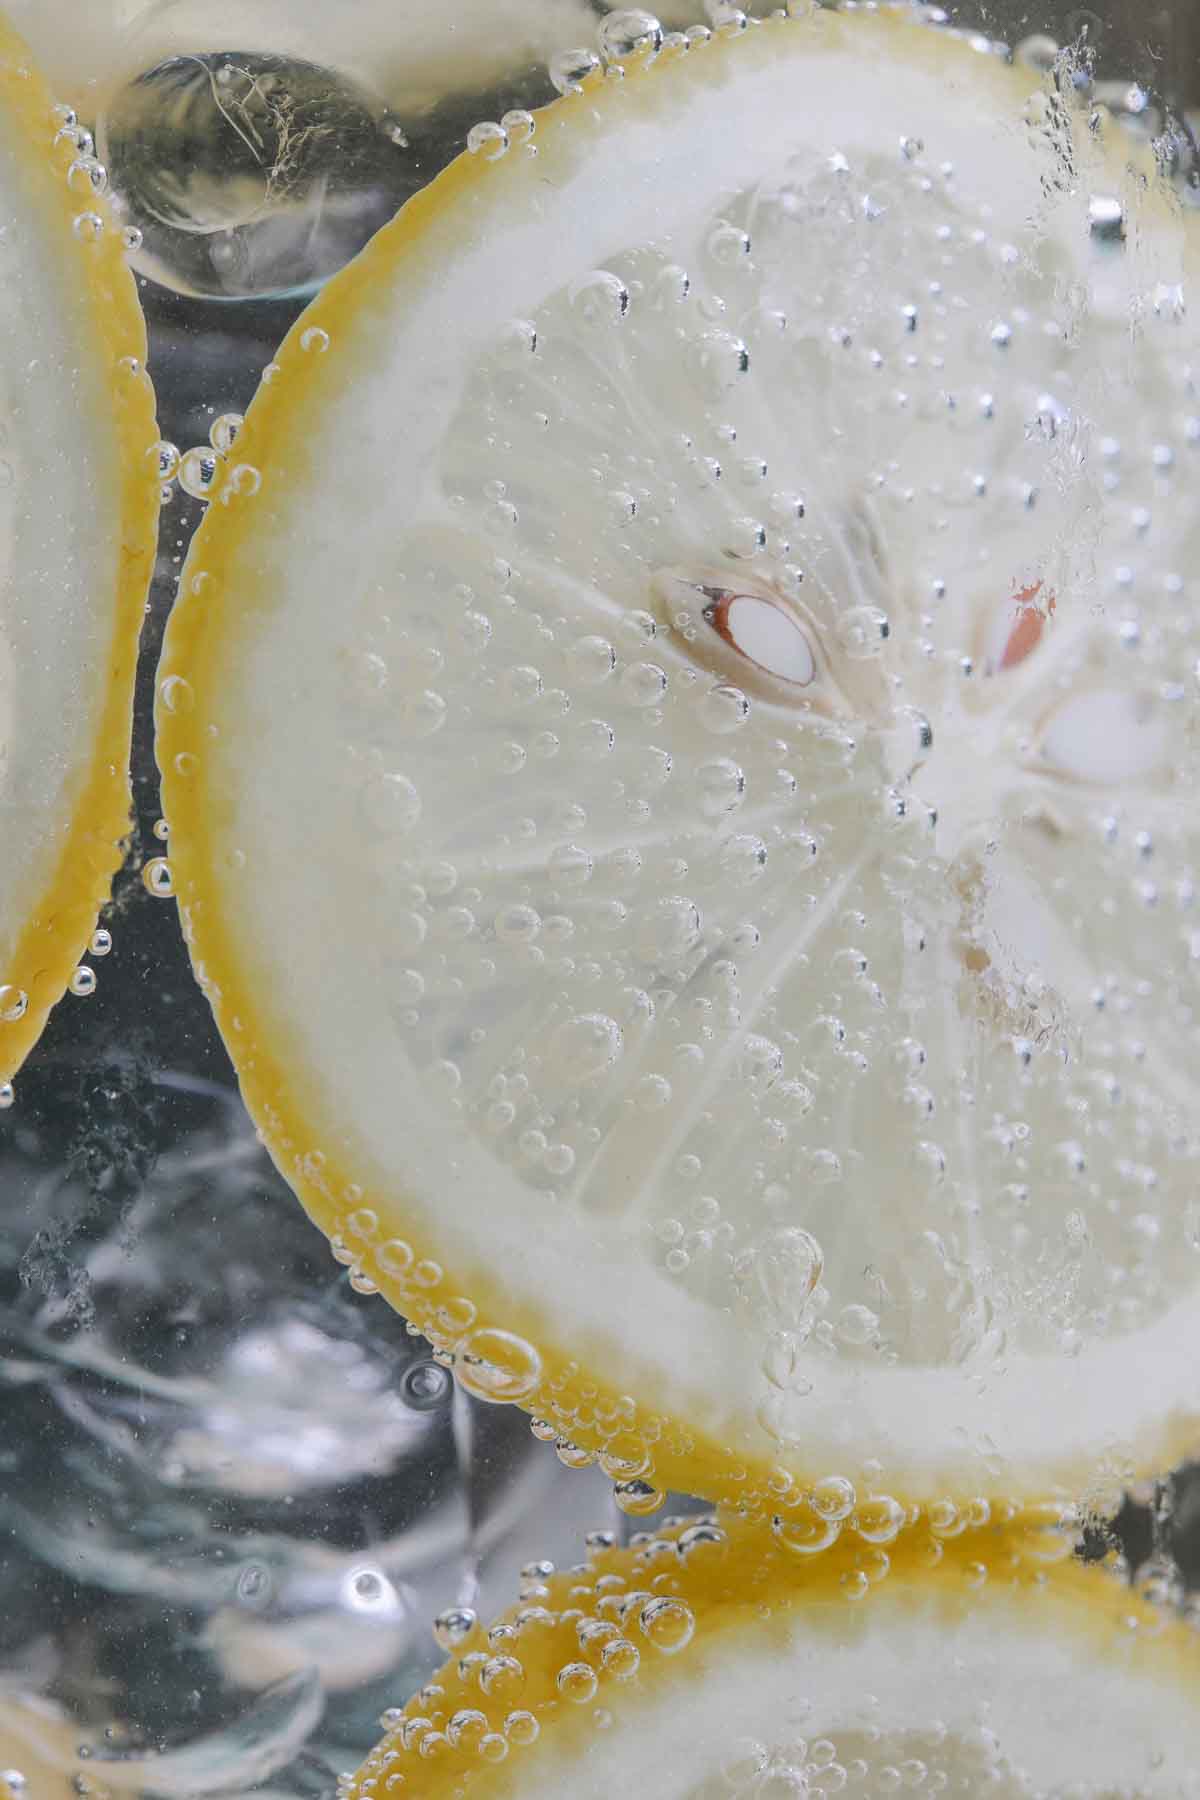 Slice of lemon in the water.